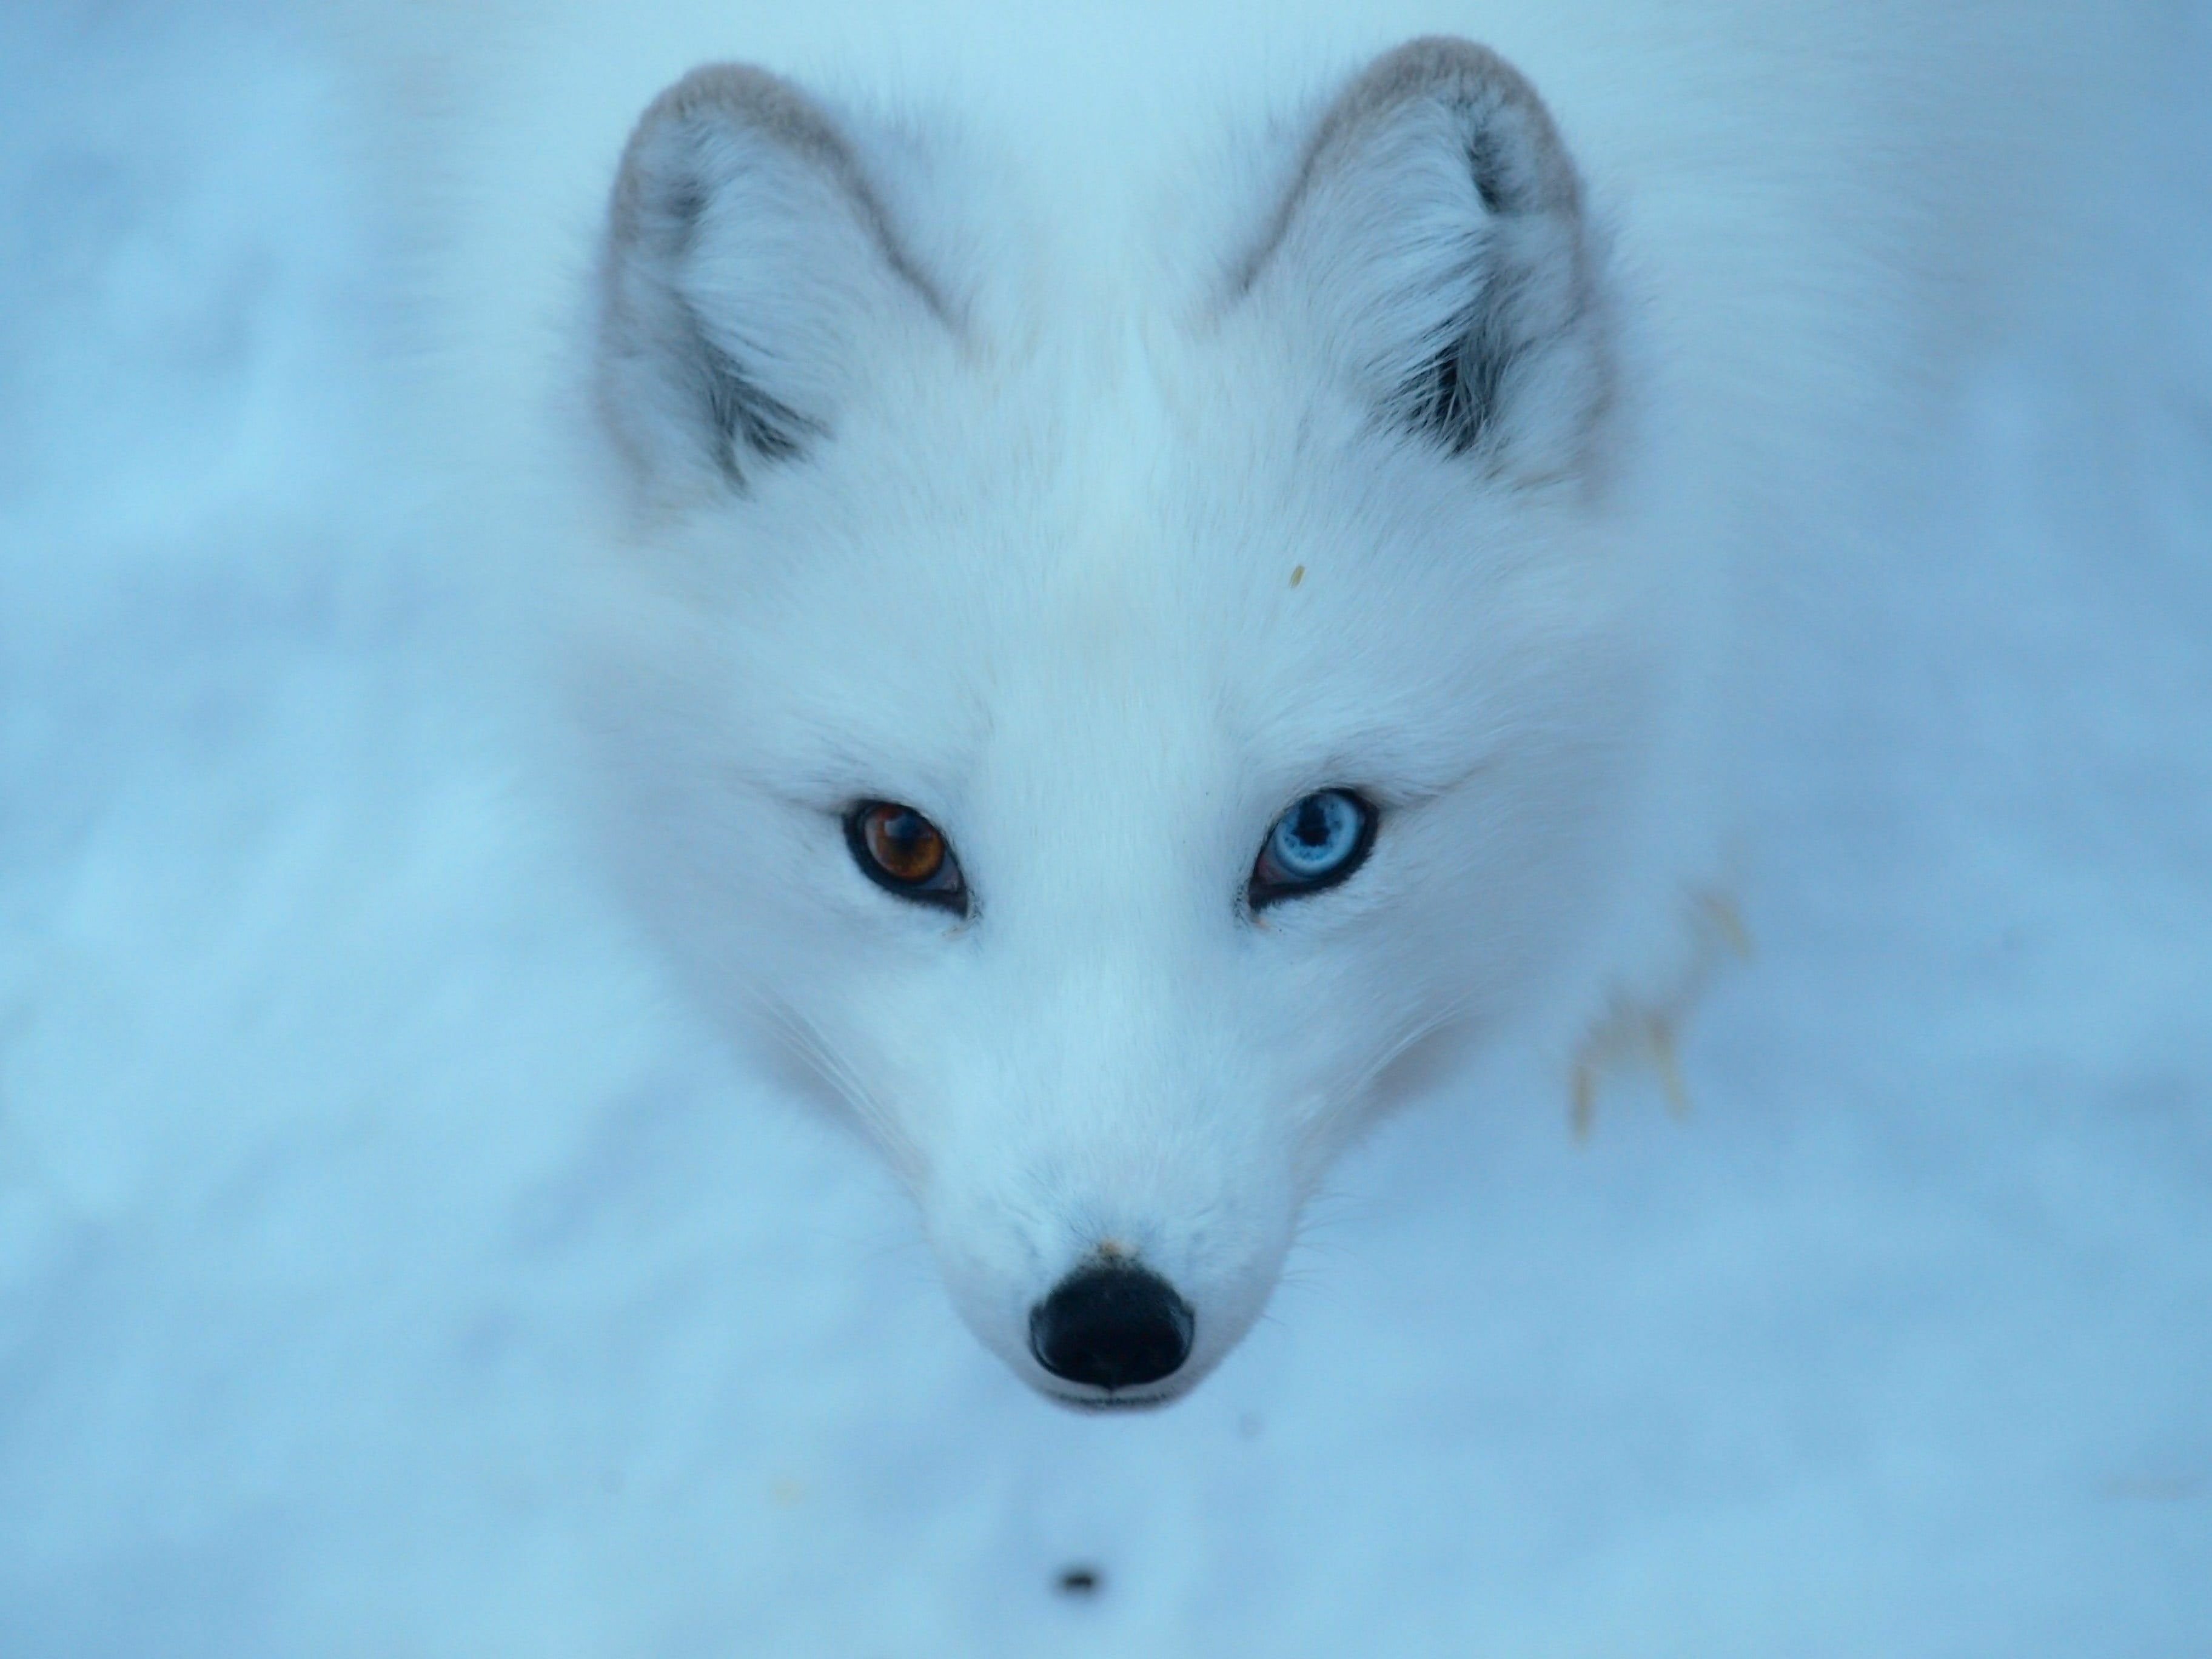 Песец (фото): Белая лисица, забравшаяся за полярный круг